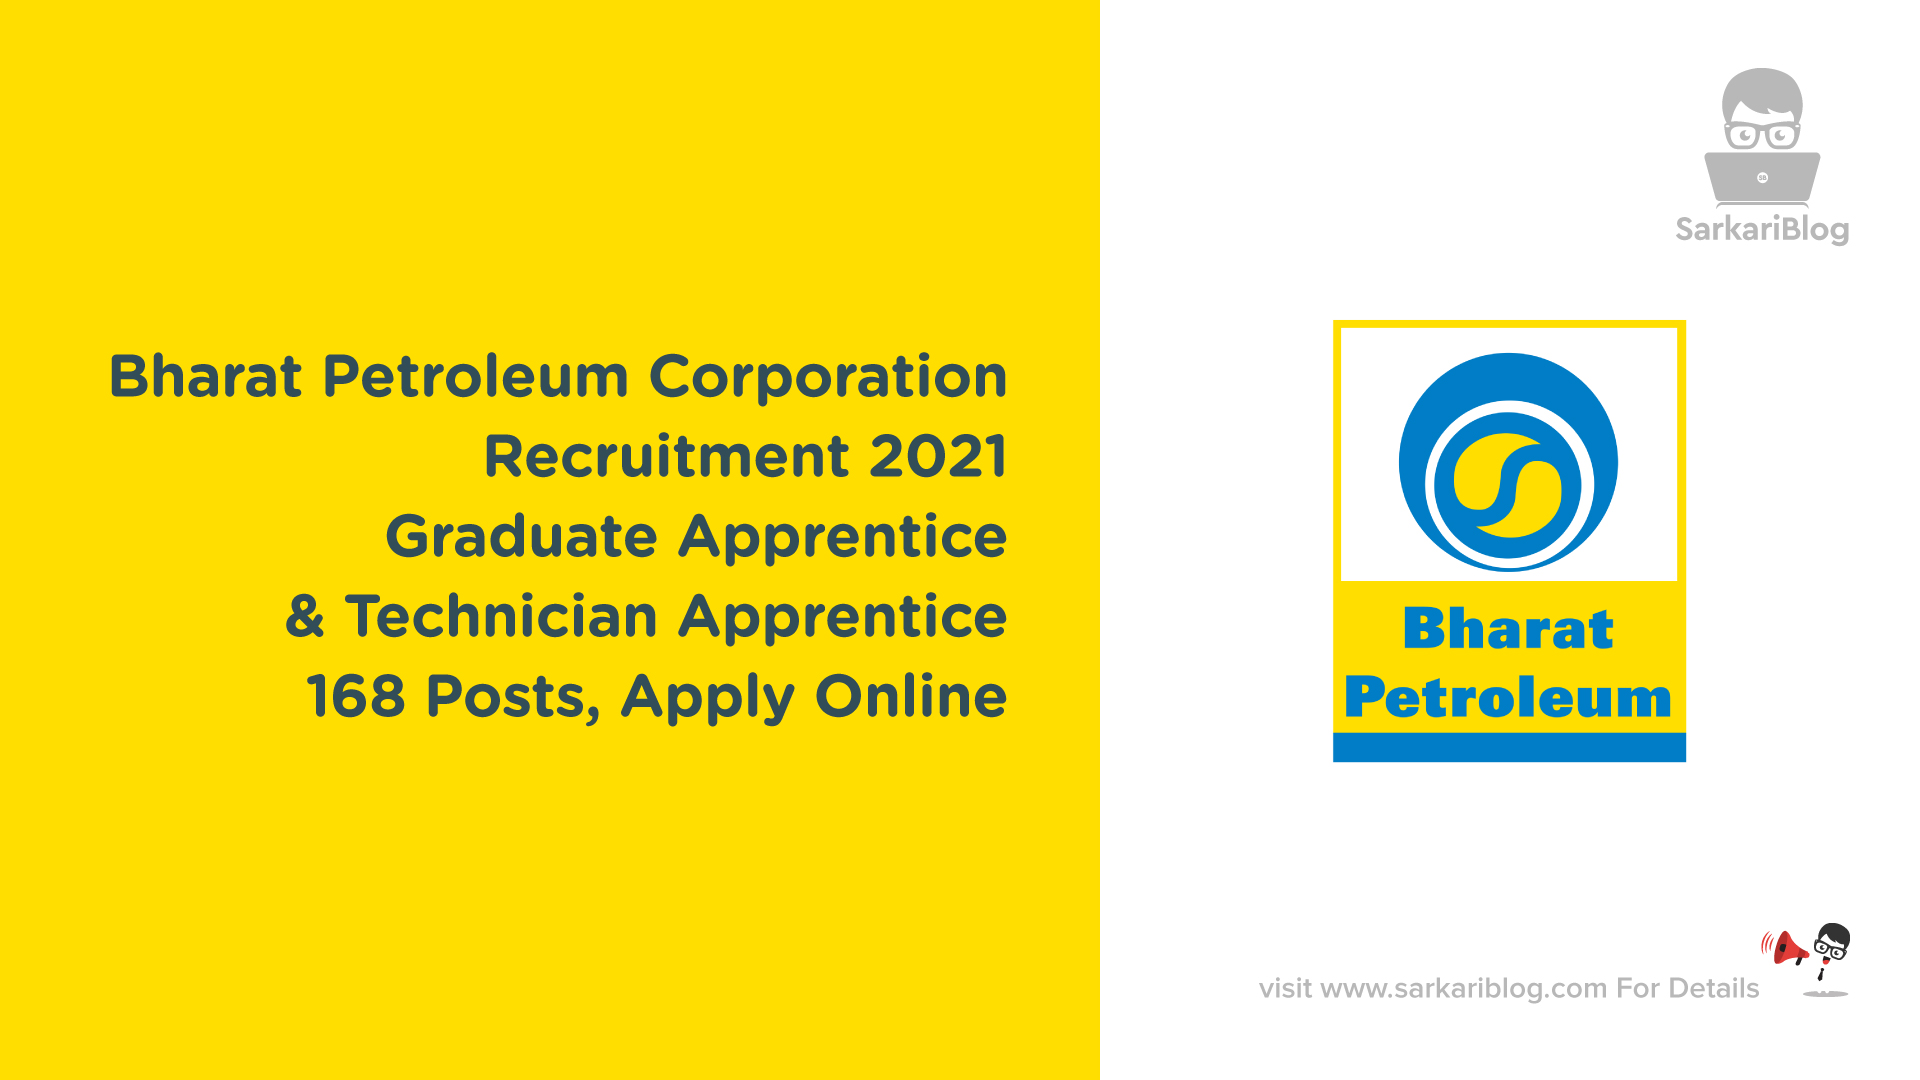 Bharat Petroleum Corporation Recruitment 2021 - Graduate Apprentice & Technician Apprentice, 168 Posts, Apply Online